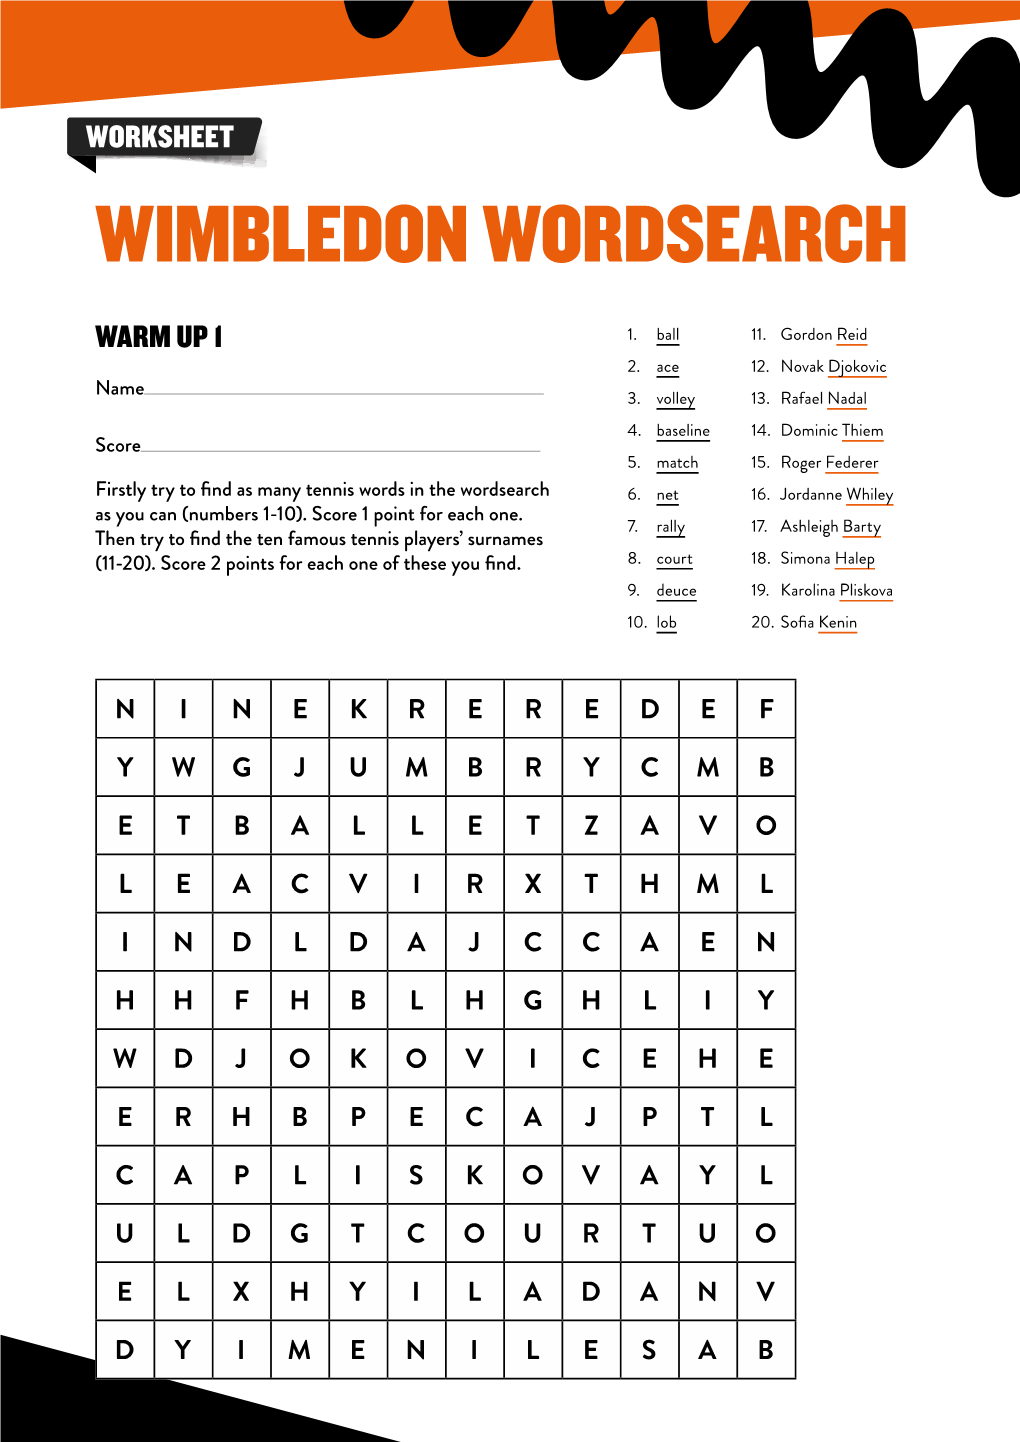 Wimbledon Wordsearch